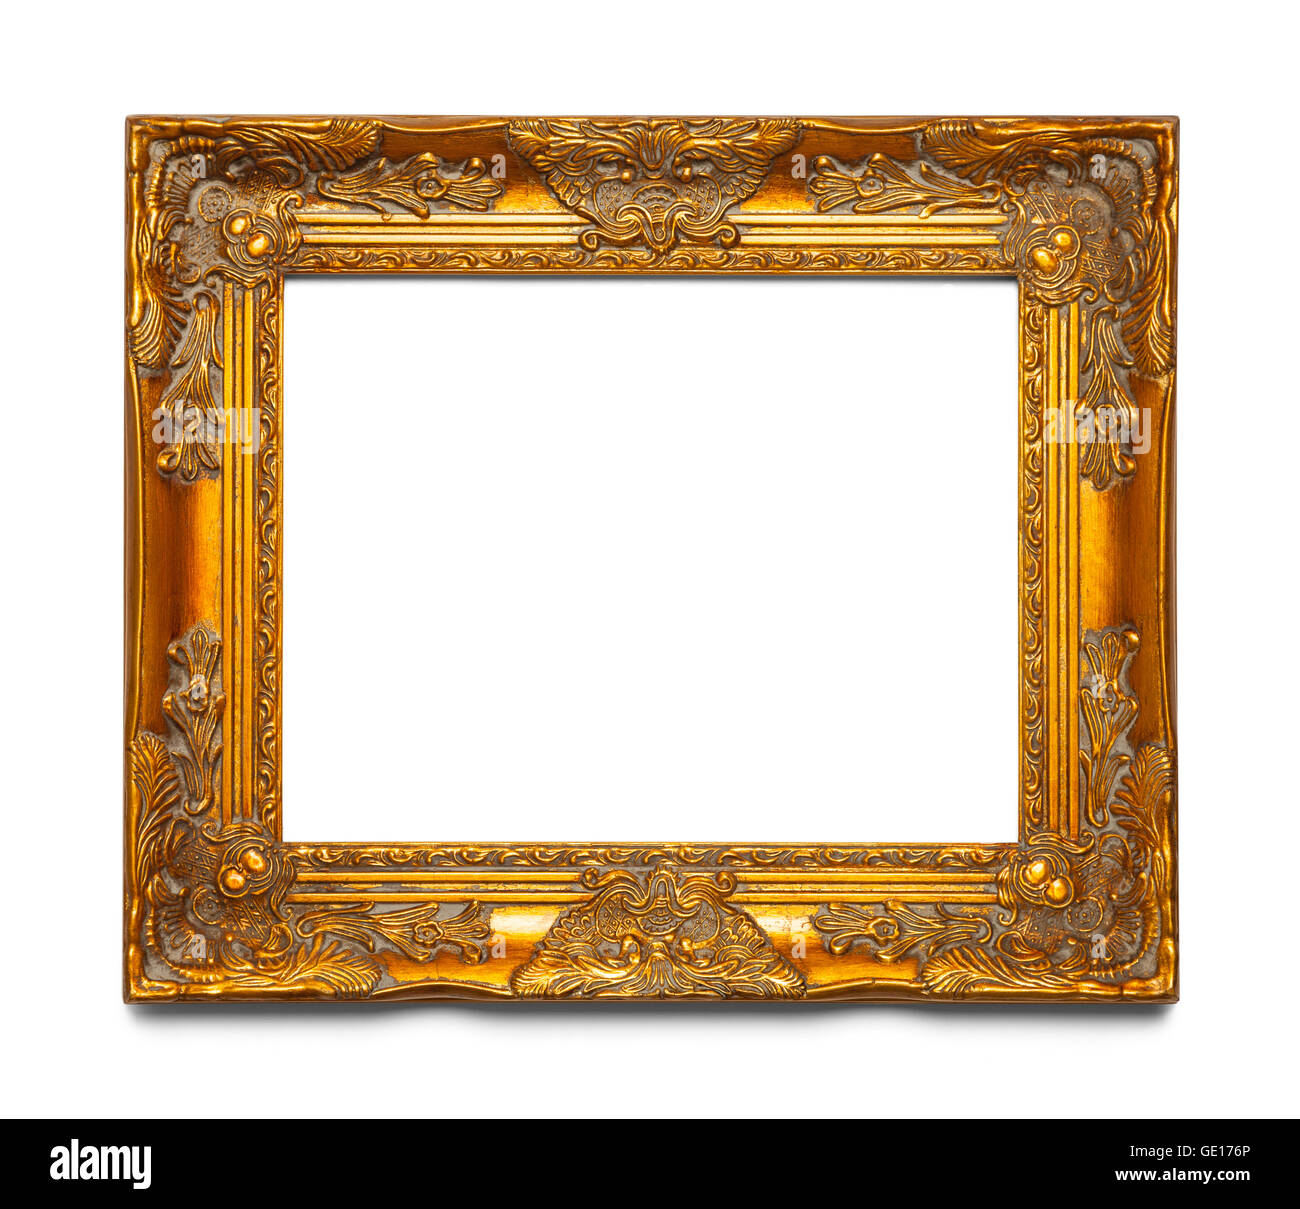 Old Gold Leaf Ornate Frame Isolated on White Background. Stock Photo